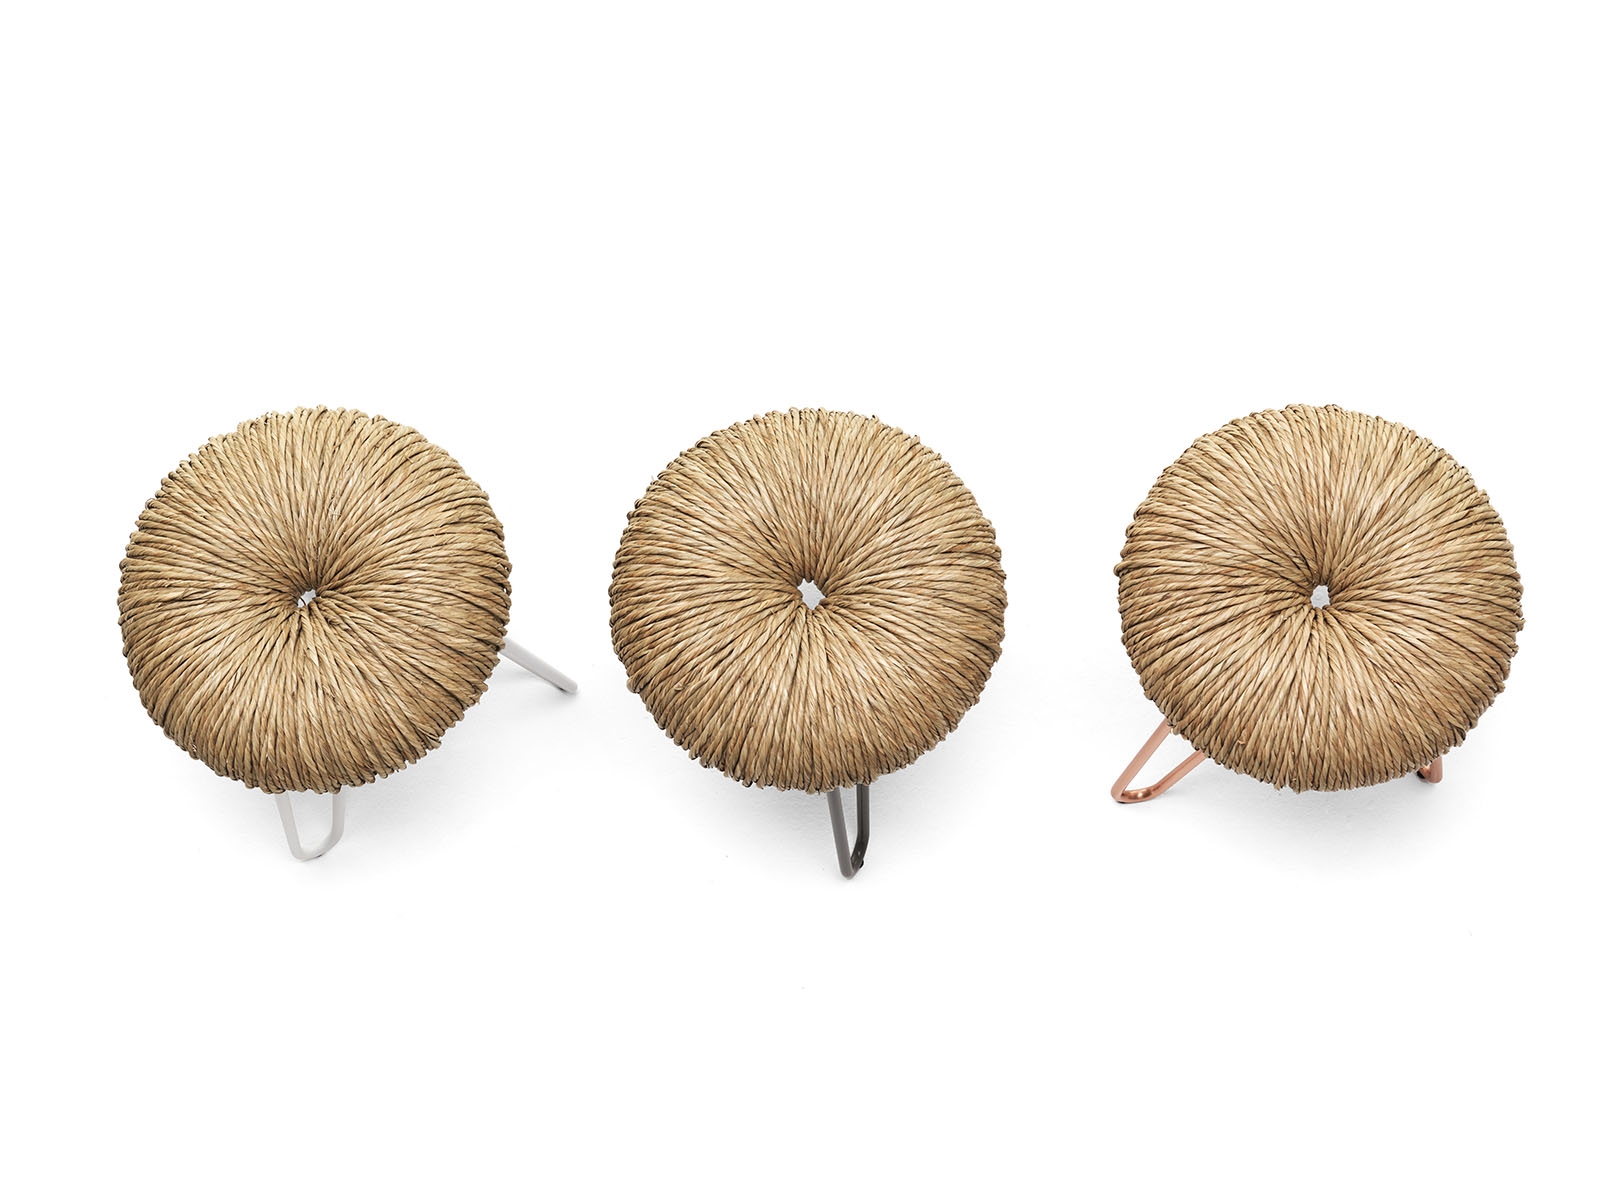 Donut Stools by Alessandra Baldereschi for MOGG